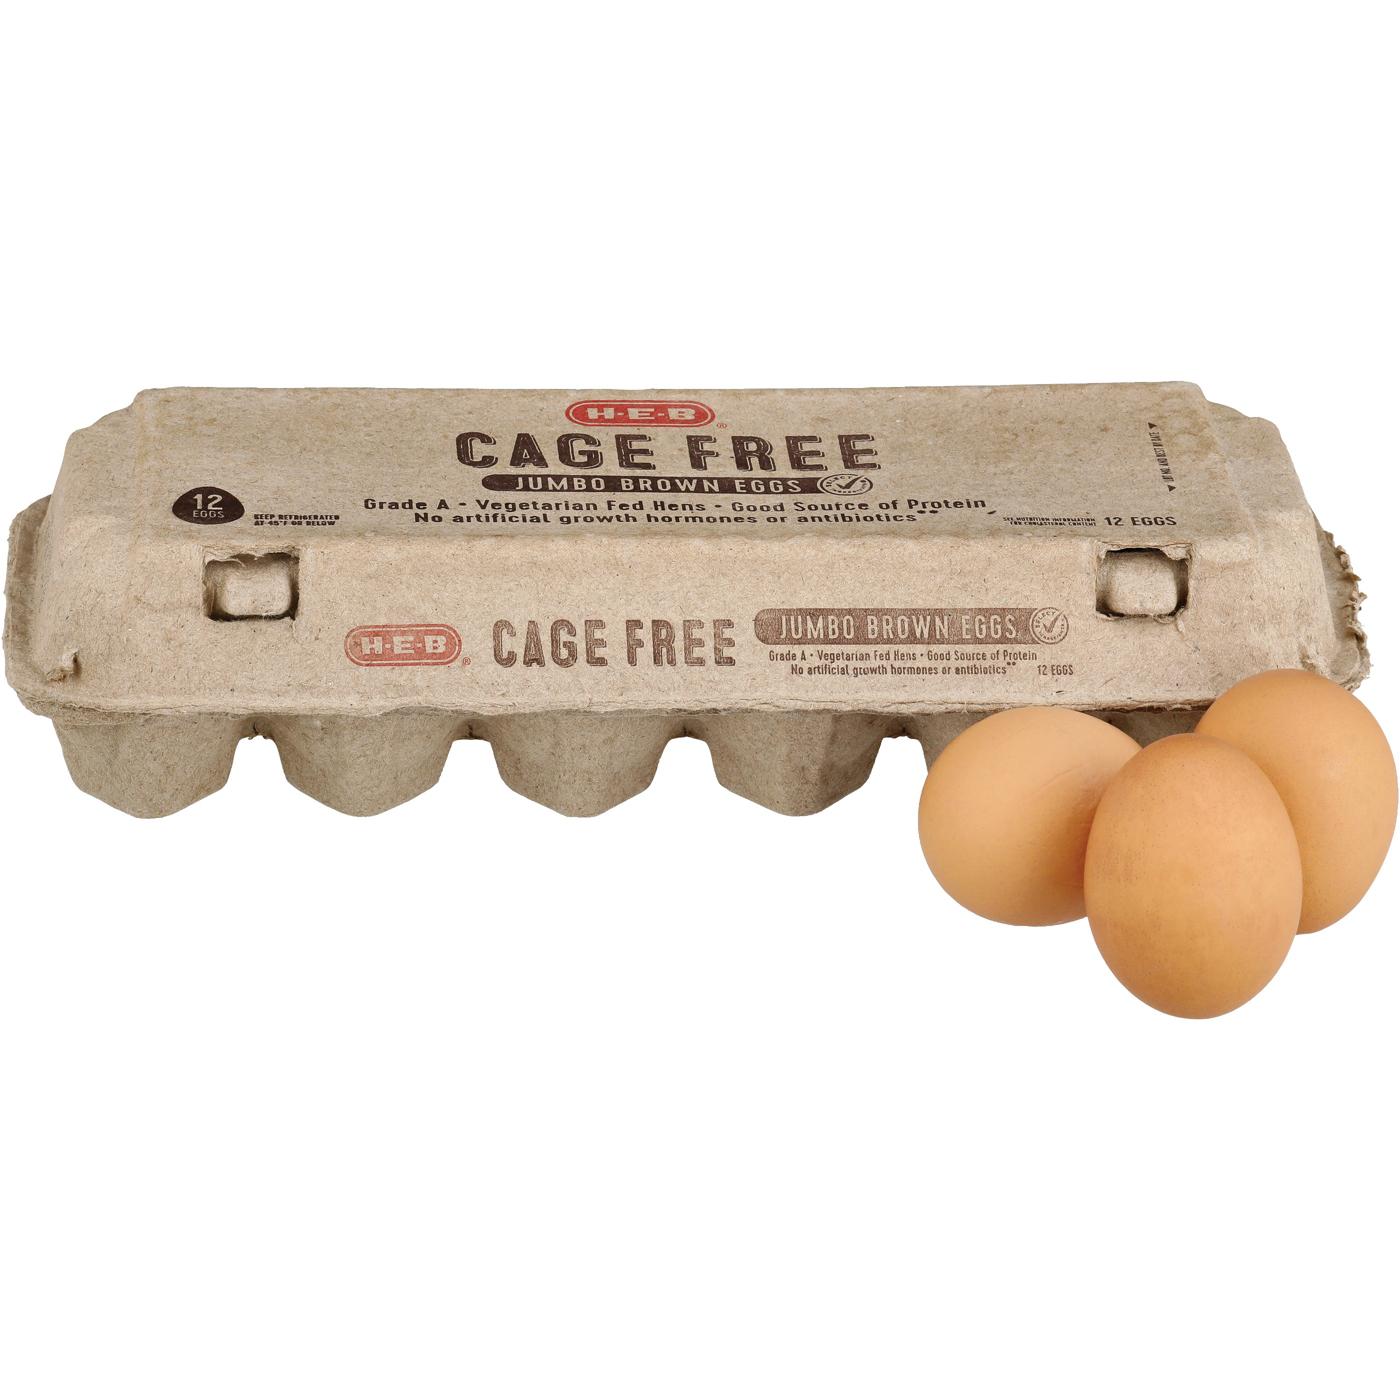 H-E-B Grade A Cage Free Jumbo Brown Eggs; image 1 of 2